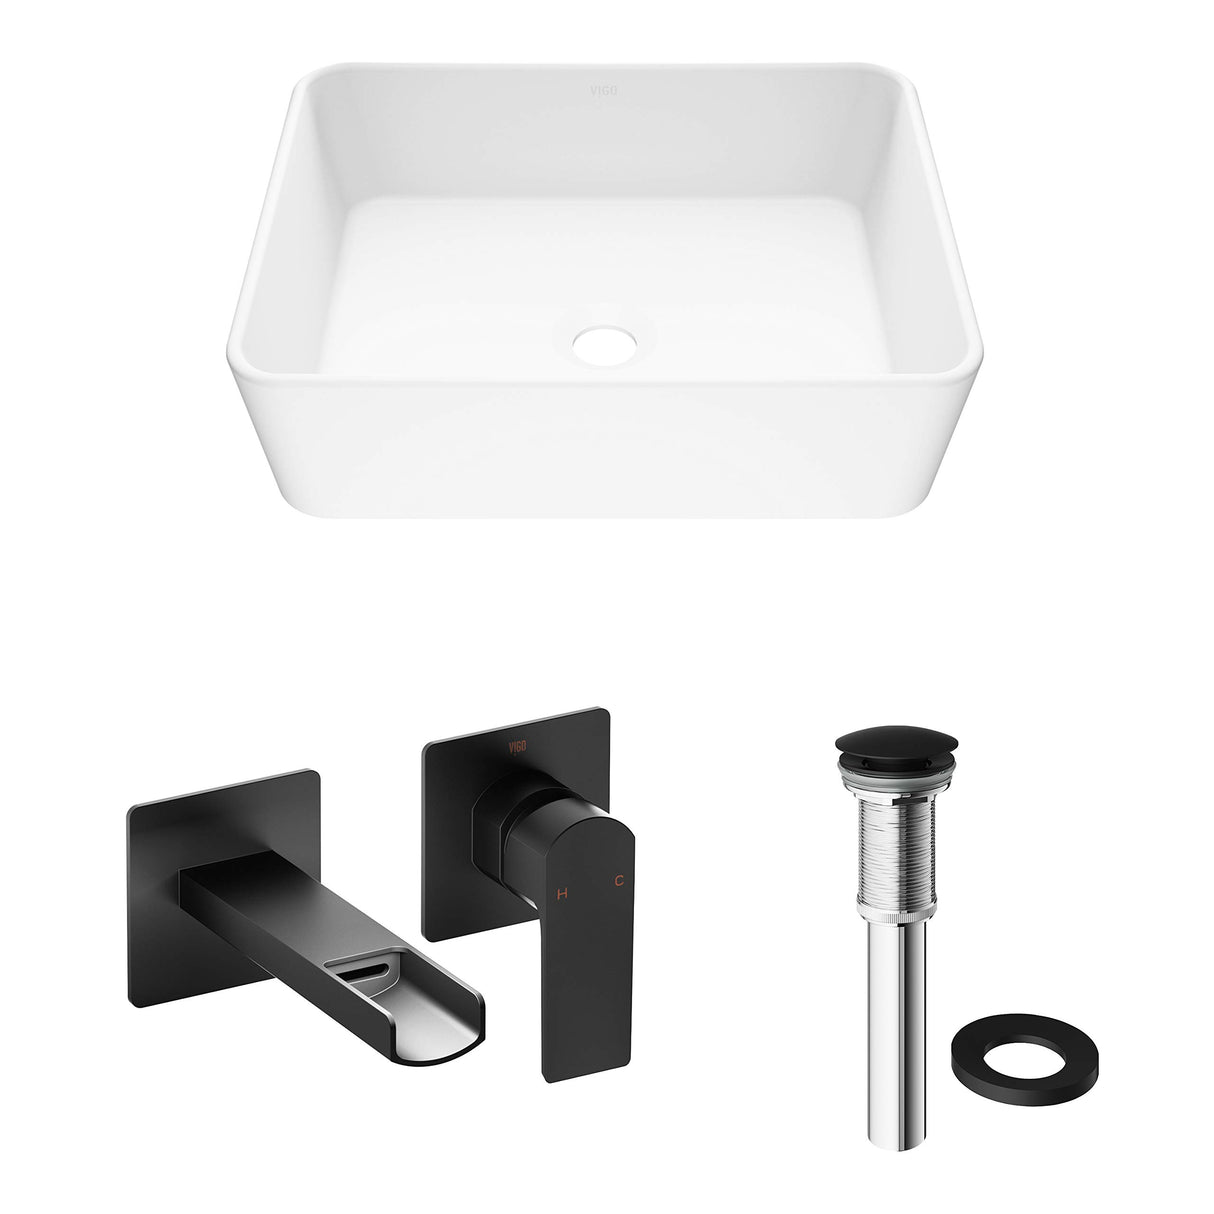 VIGO VGT981 14.38" L -17.75" W -5.13" H Matte Stone Marigold Composite Rectangular Vessel Bathroom Sink in White with Faucet and Pop-Up Drain in Matte Black